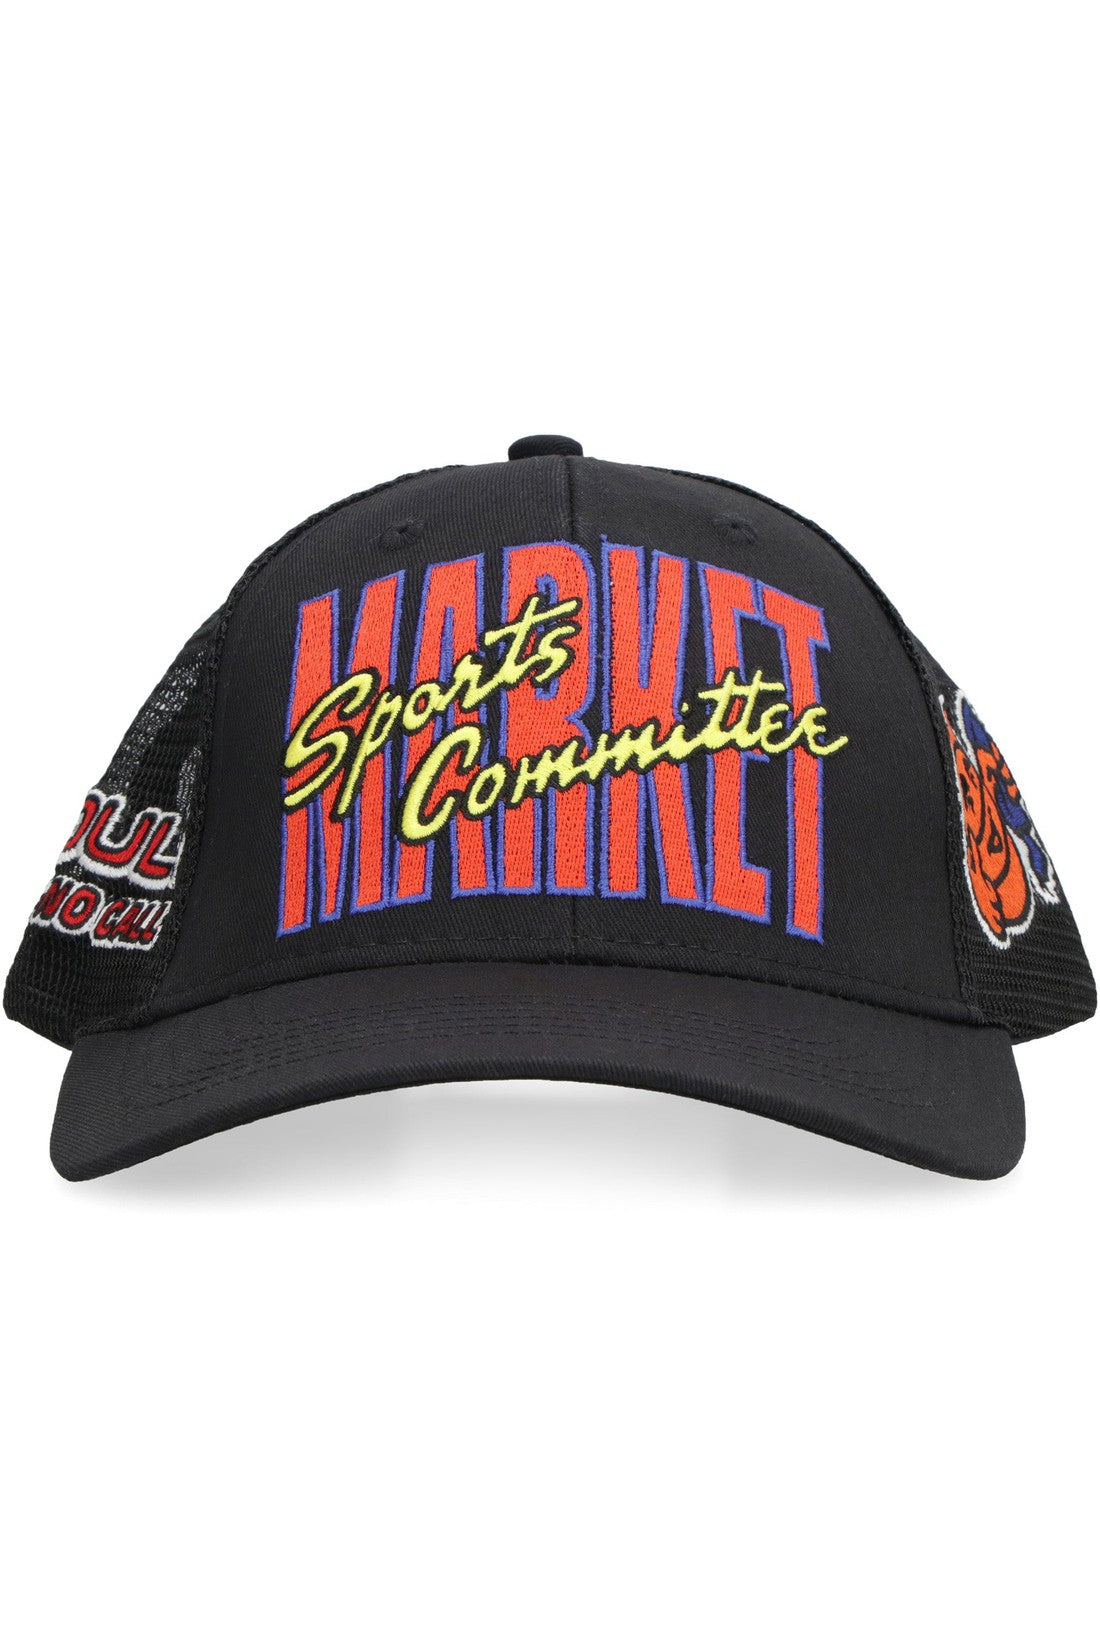 Market-OUTLET-SALE-Embroidered baseball cap-ARCHIVIST